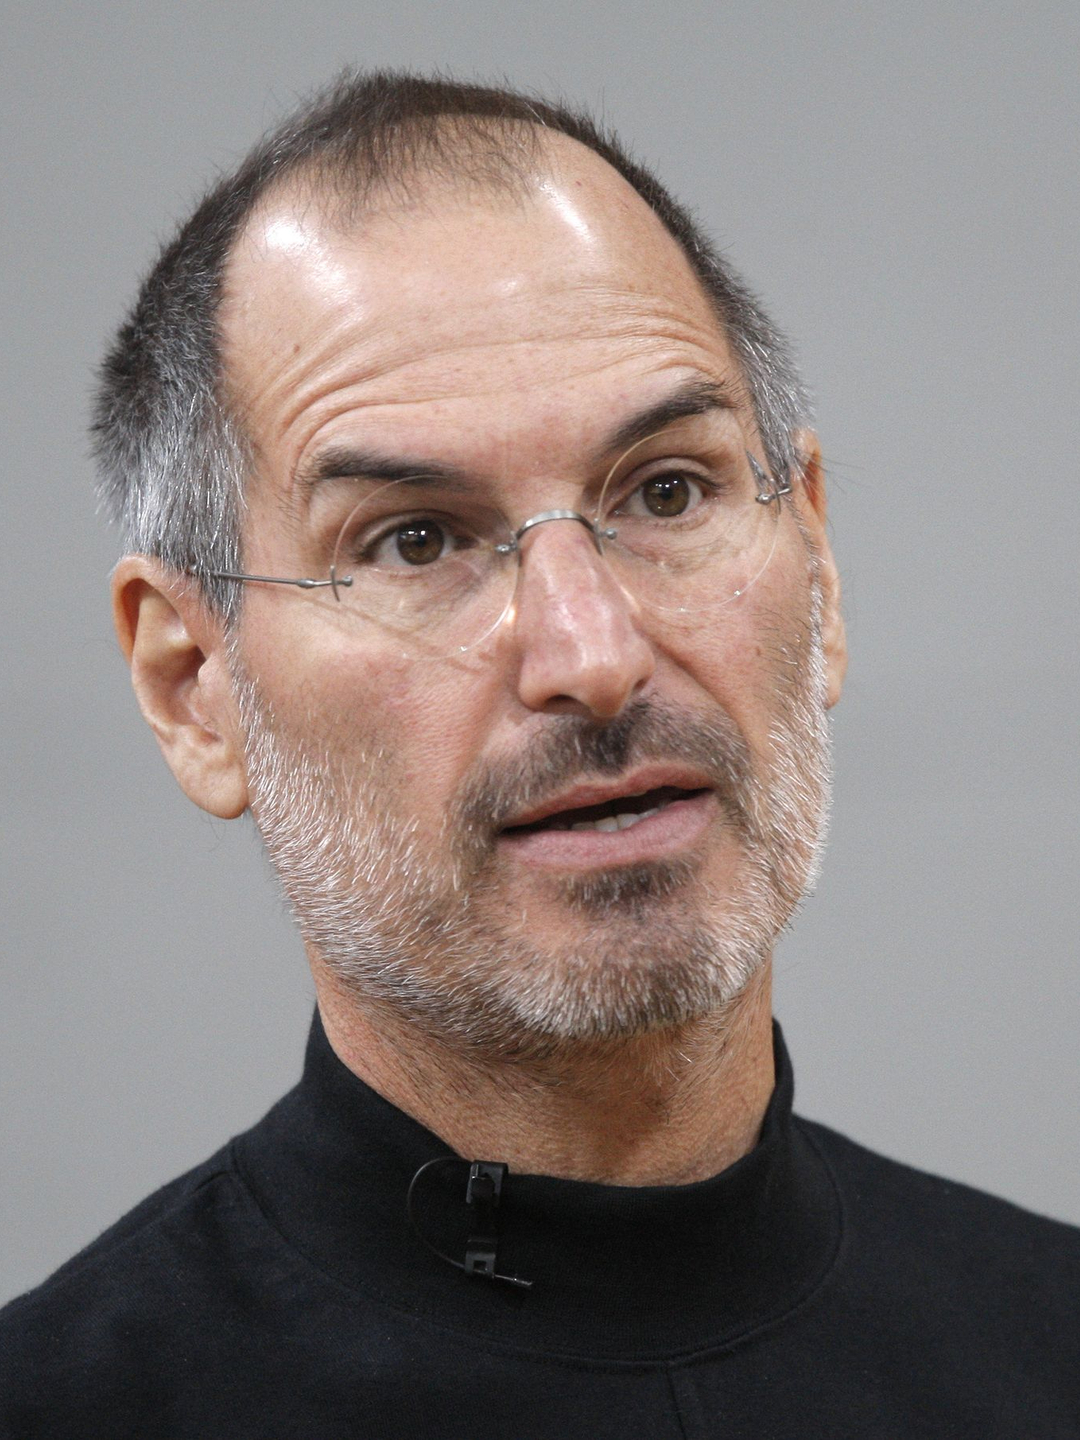 Steve Jobs young photos